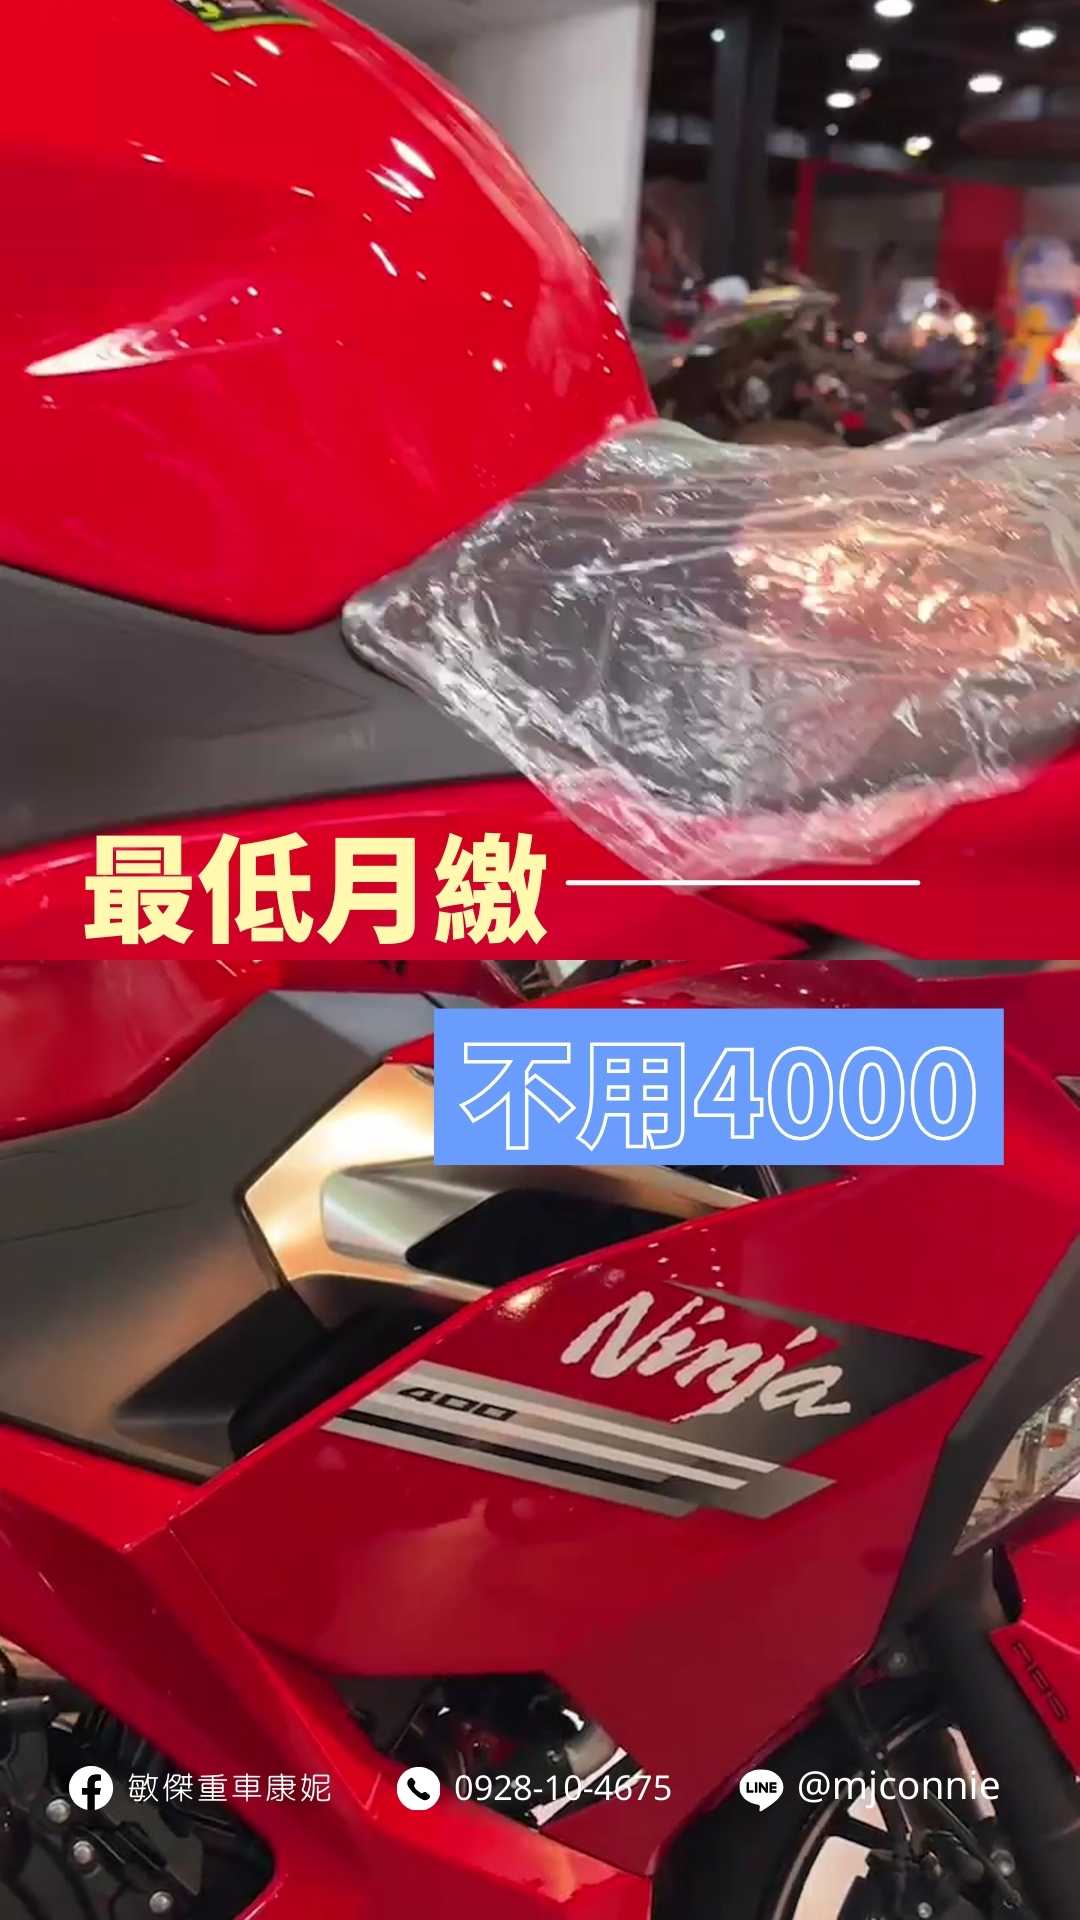 KAWASAKI NINJA400新車出售中 『敏傑康妮』Kawasaki Ninja400 2023年 超狂購車方案！月繳不用4000 聯絡康妮享好康～ | 敏傑車業資深銷售專員 康妮 Connie